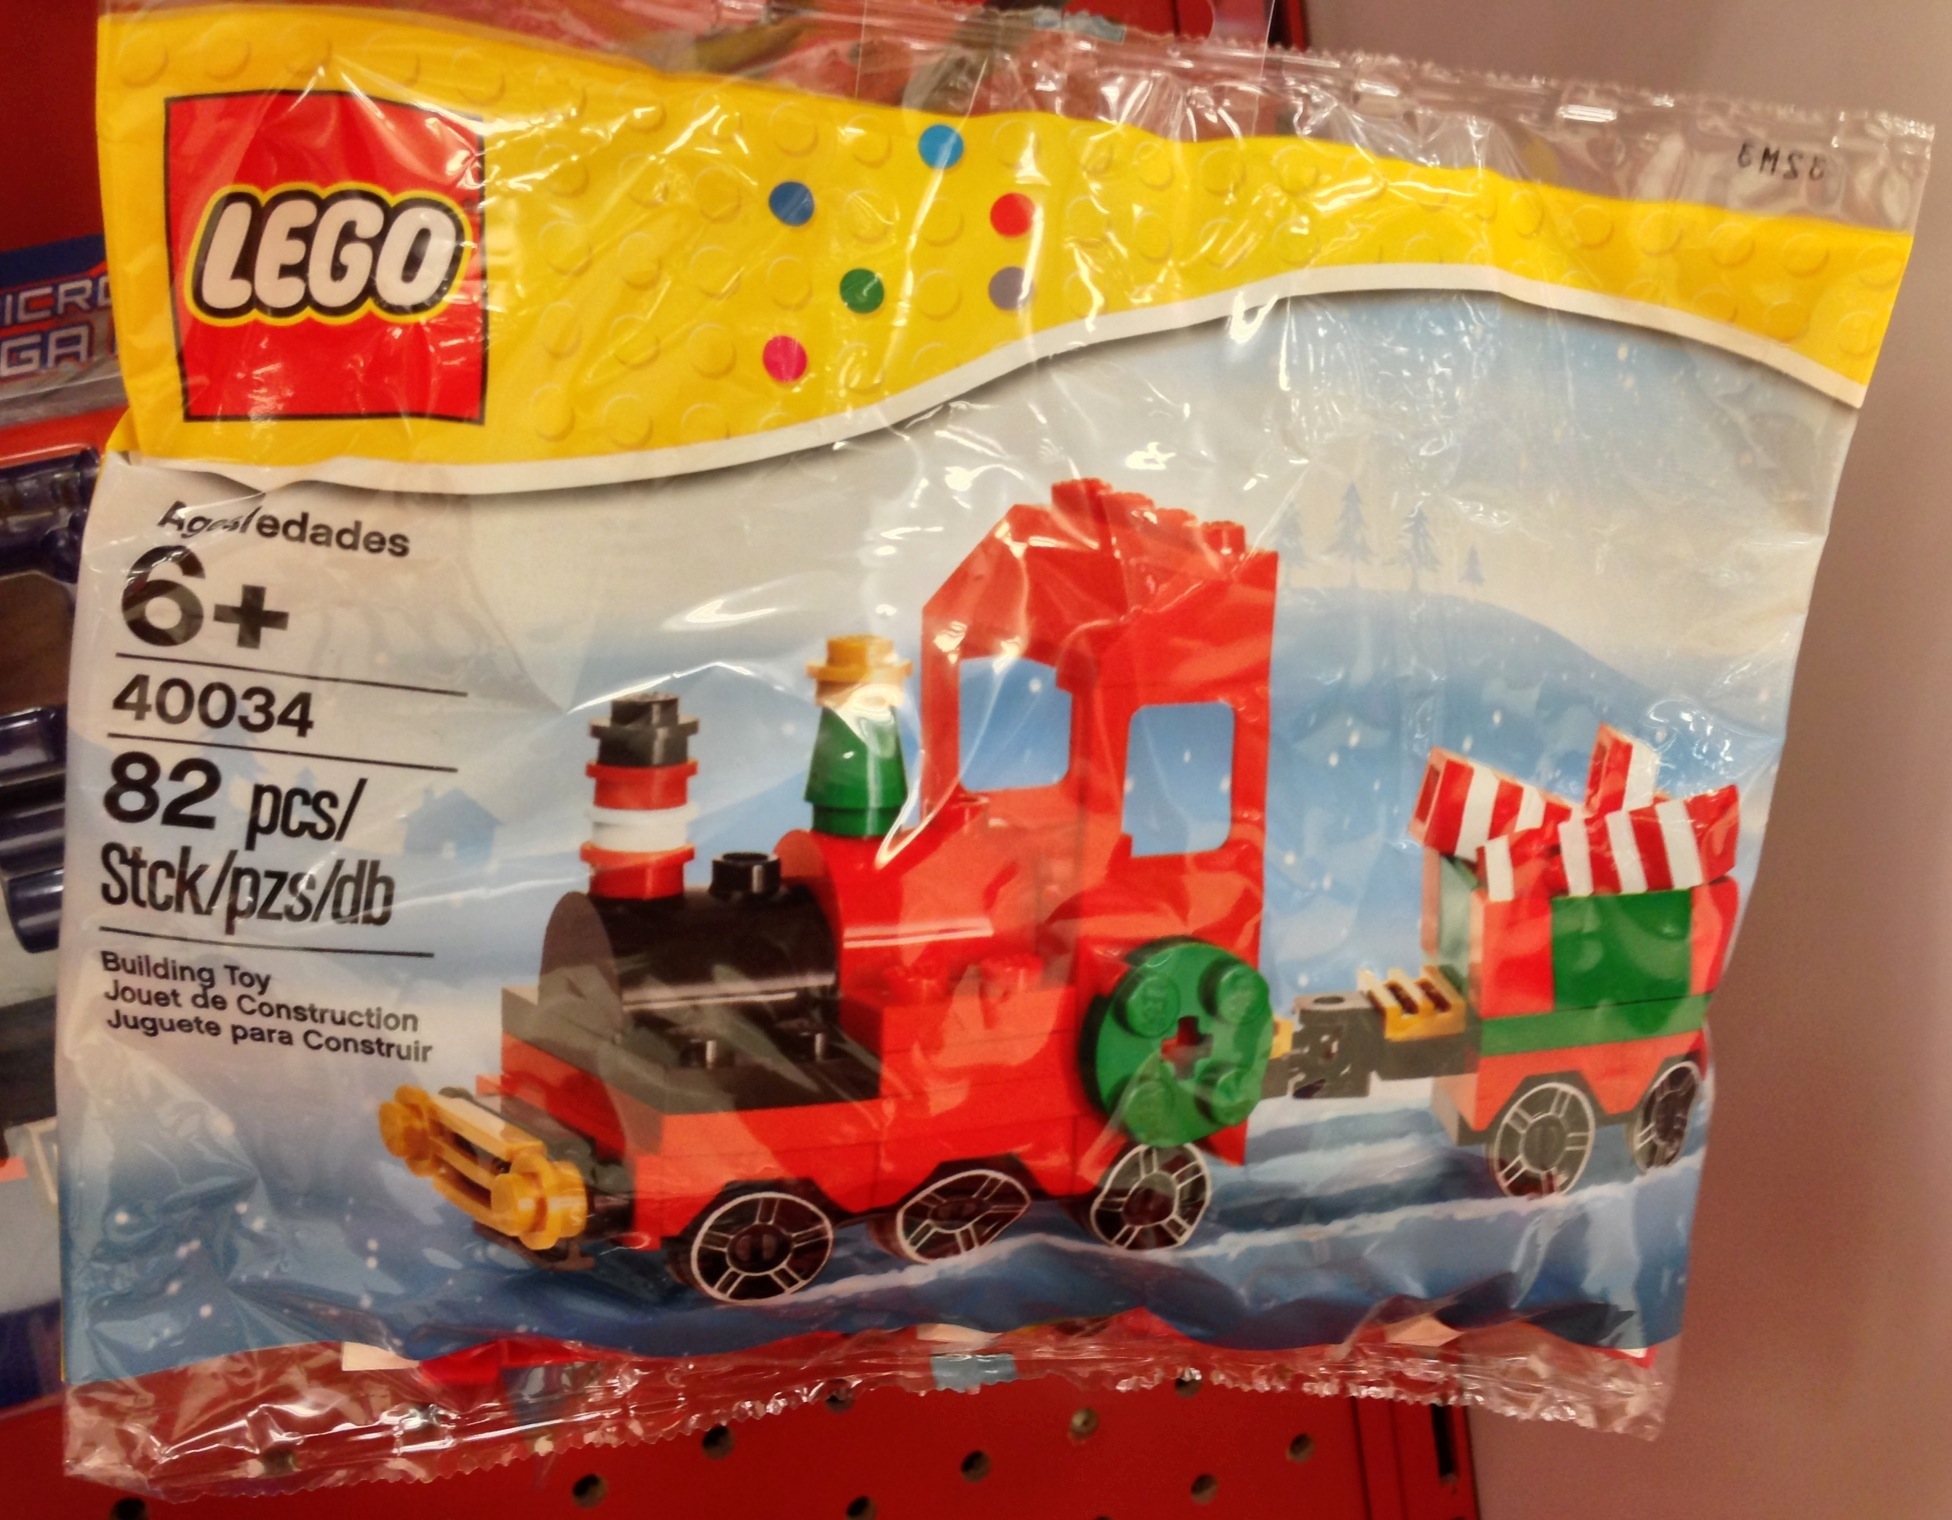 Holidays Christmas Train 40034-82 Pieces LEGO 